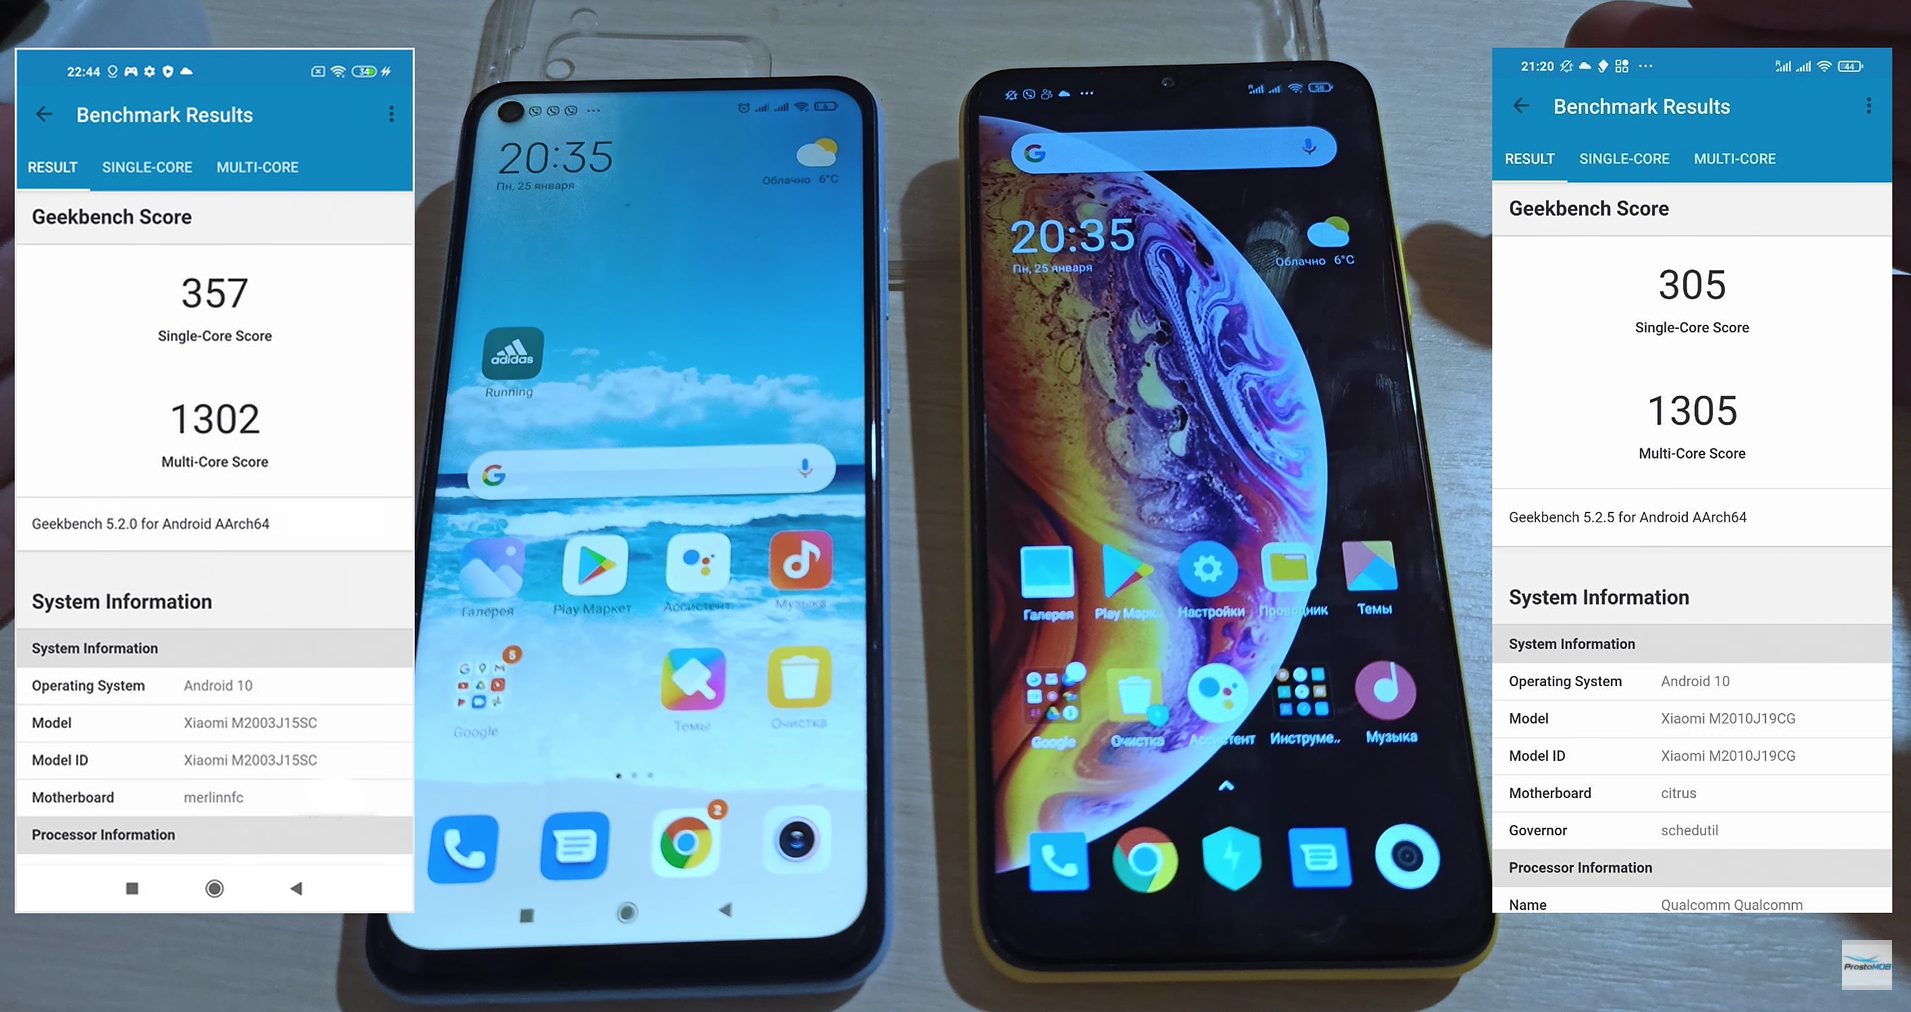 Xiaomi Poco Или Redmi Note Сравнение